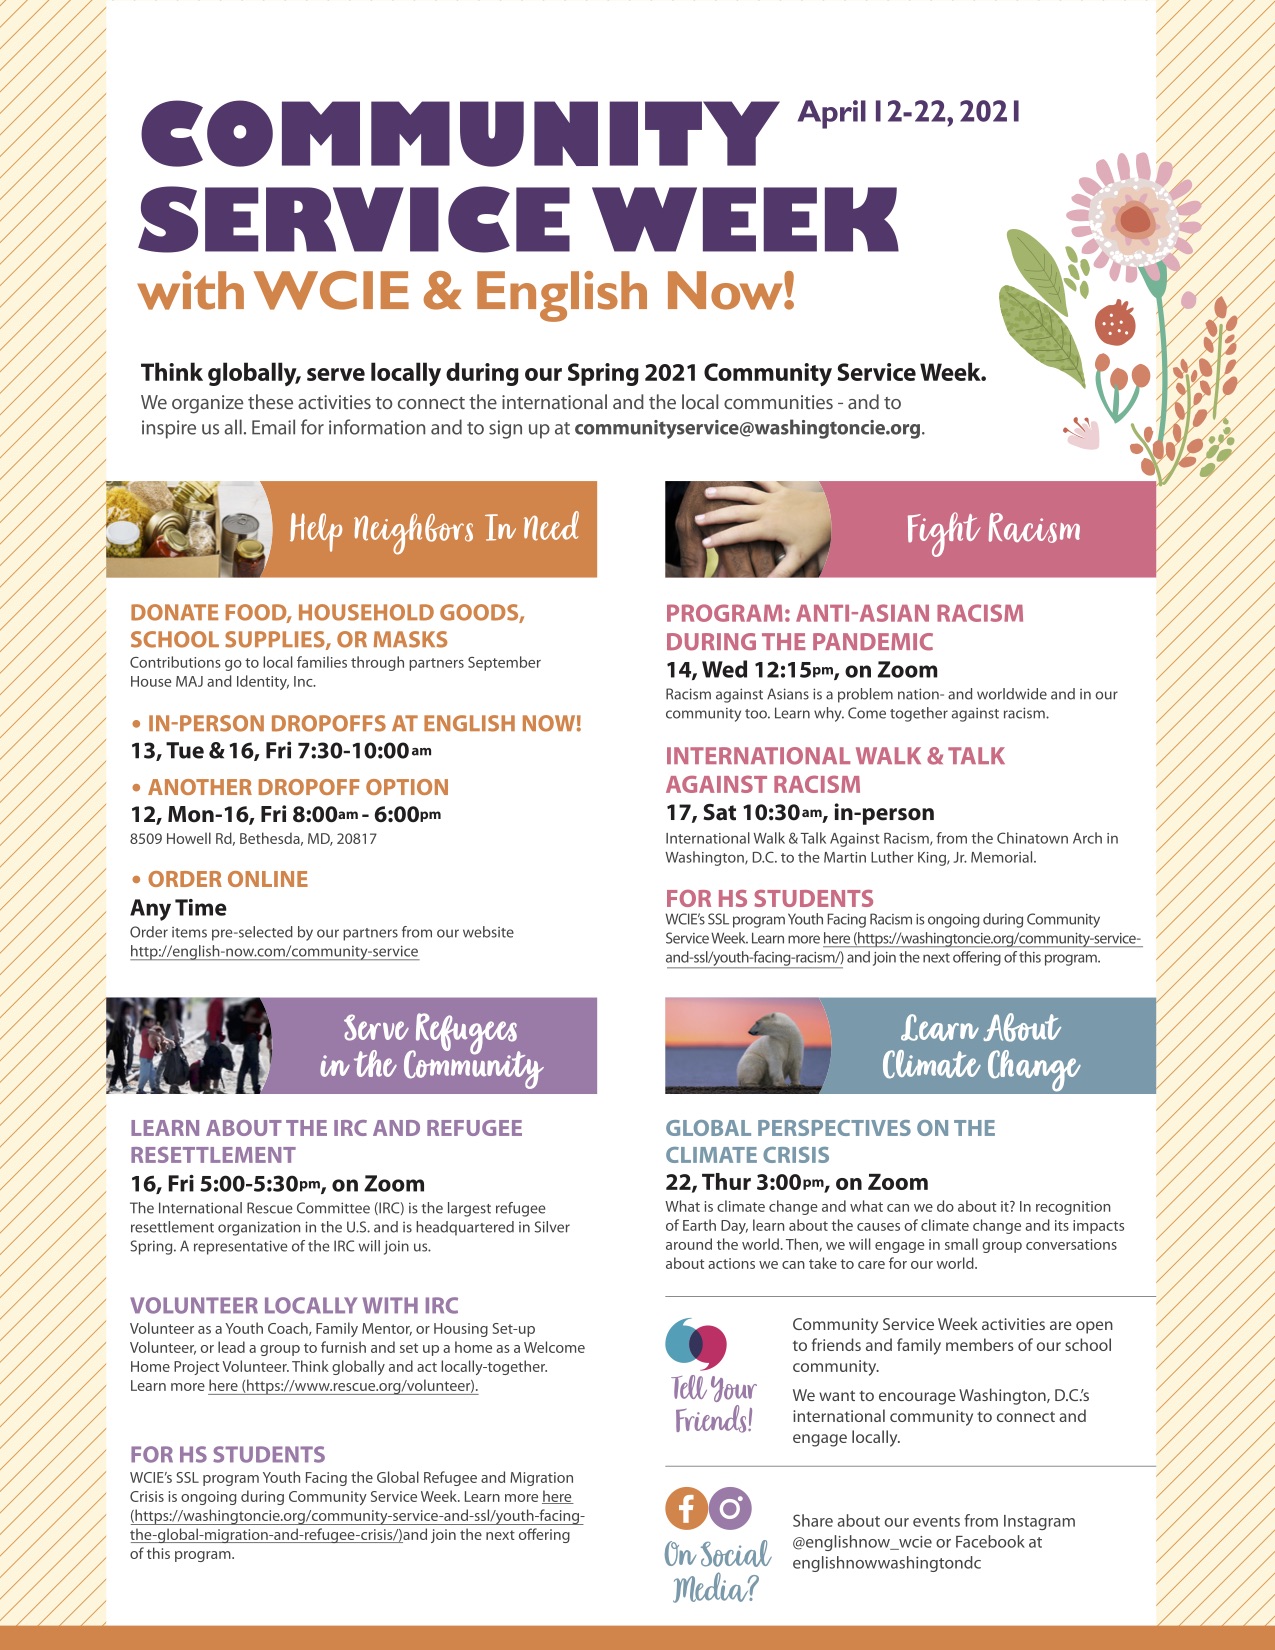 Community Service Week schedule